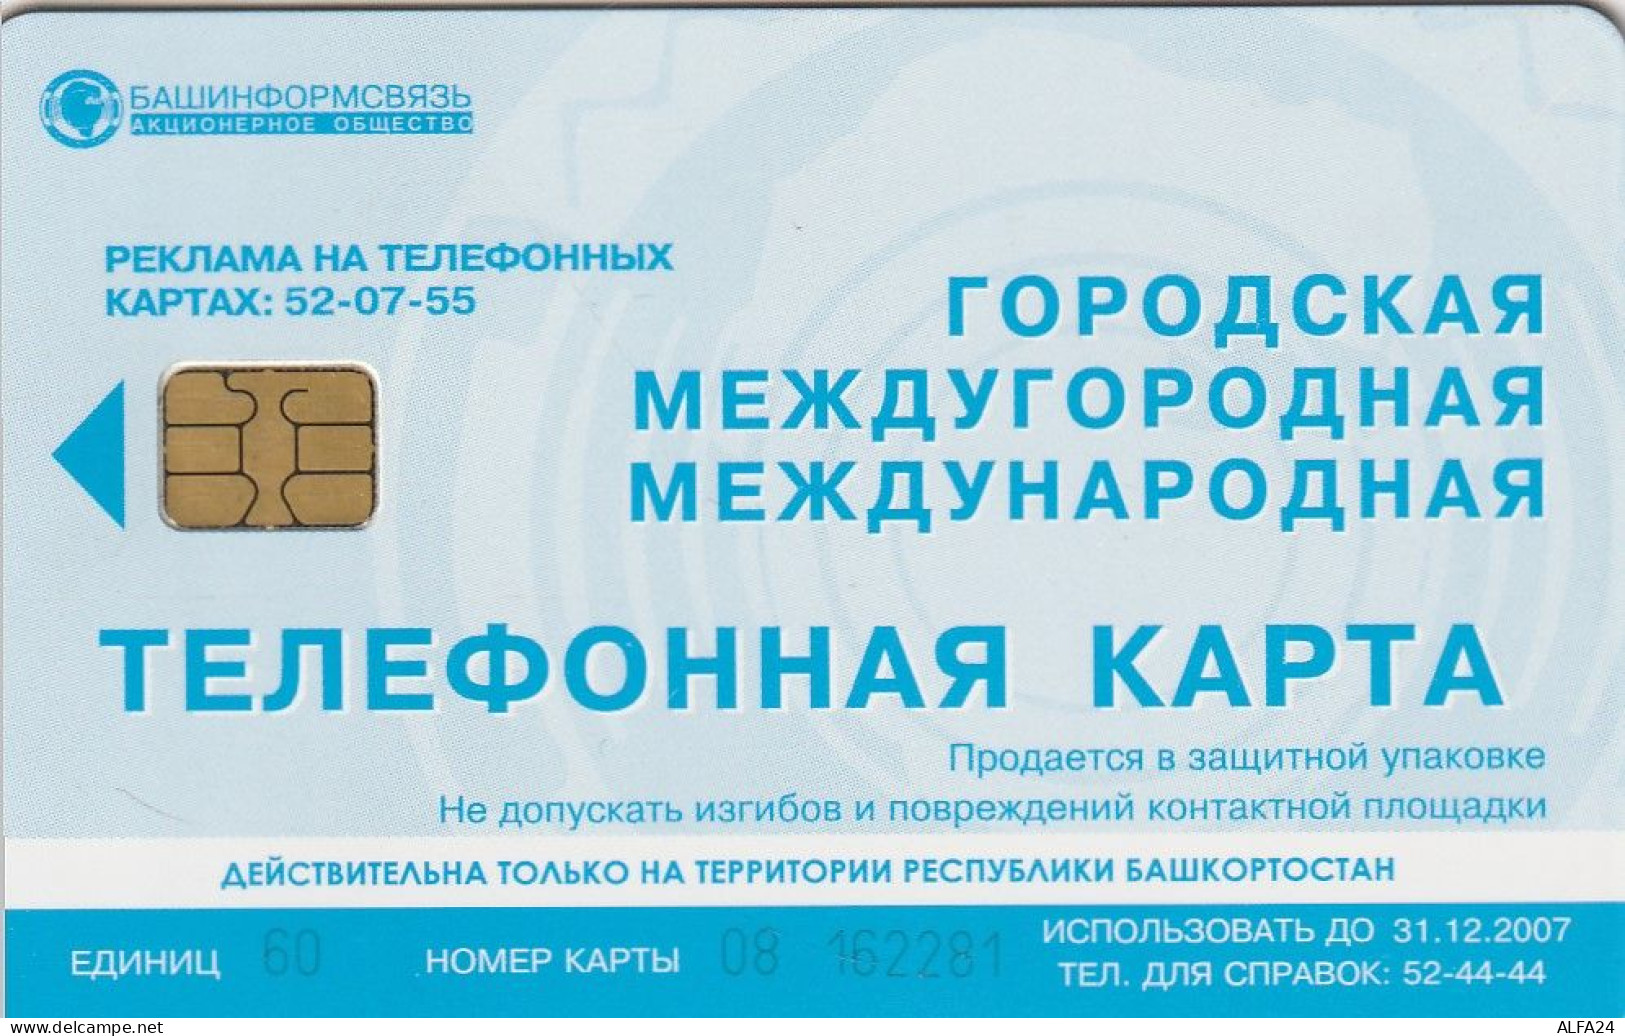 PHONE CARD RUSSIA Bashinformsvyaz - Ufa (E10.1.3 - Rusia